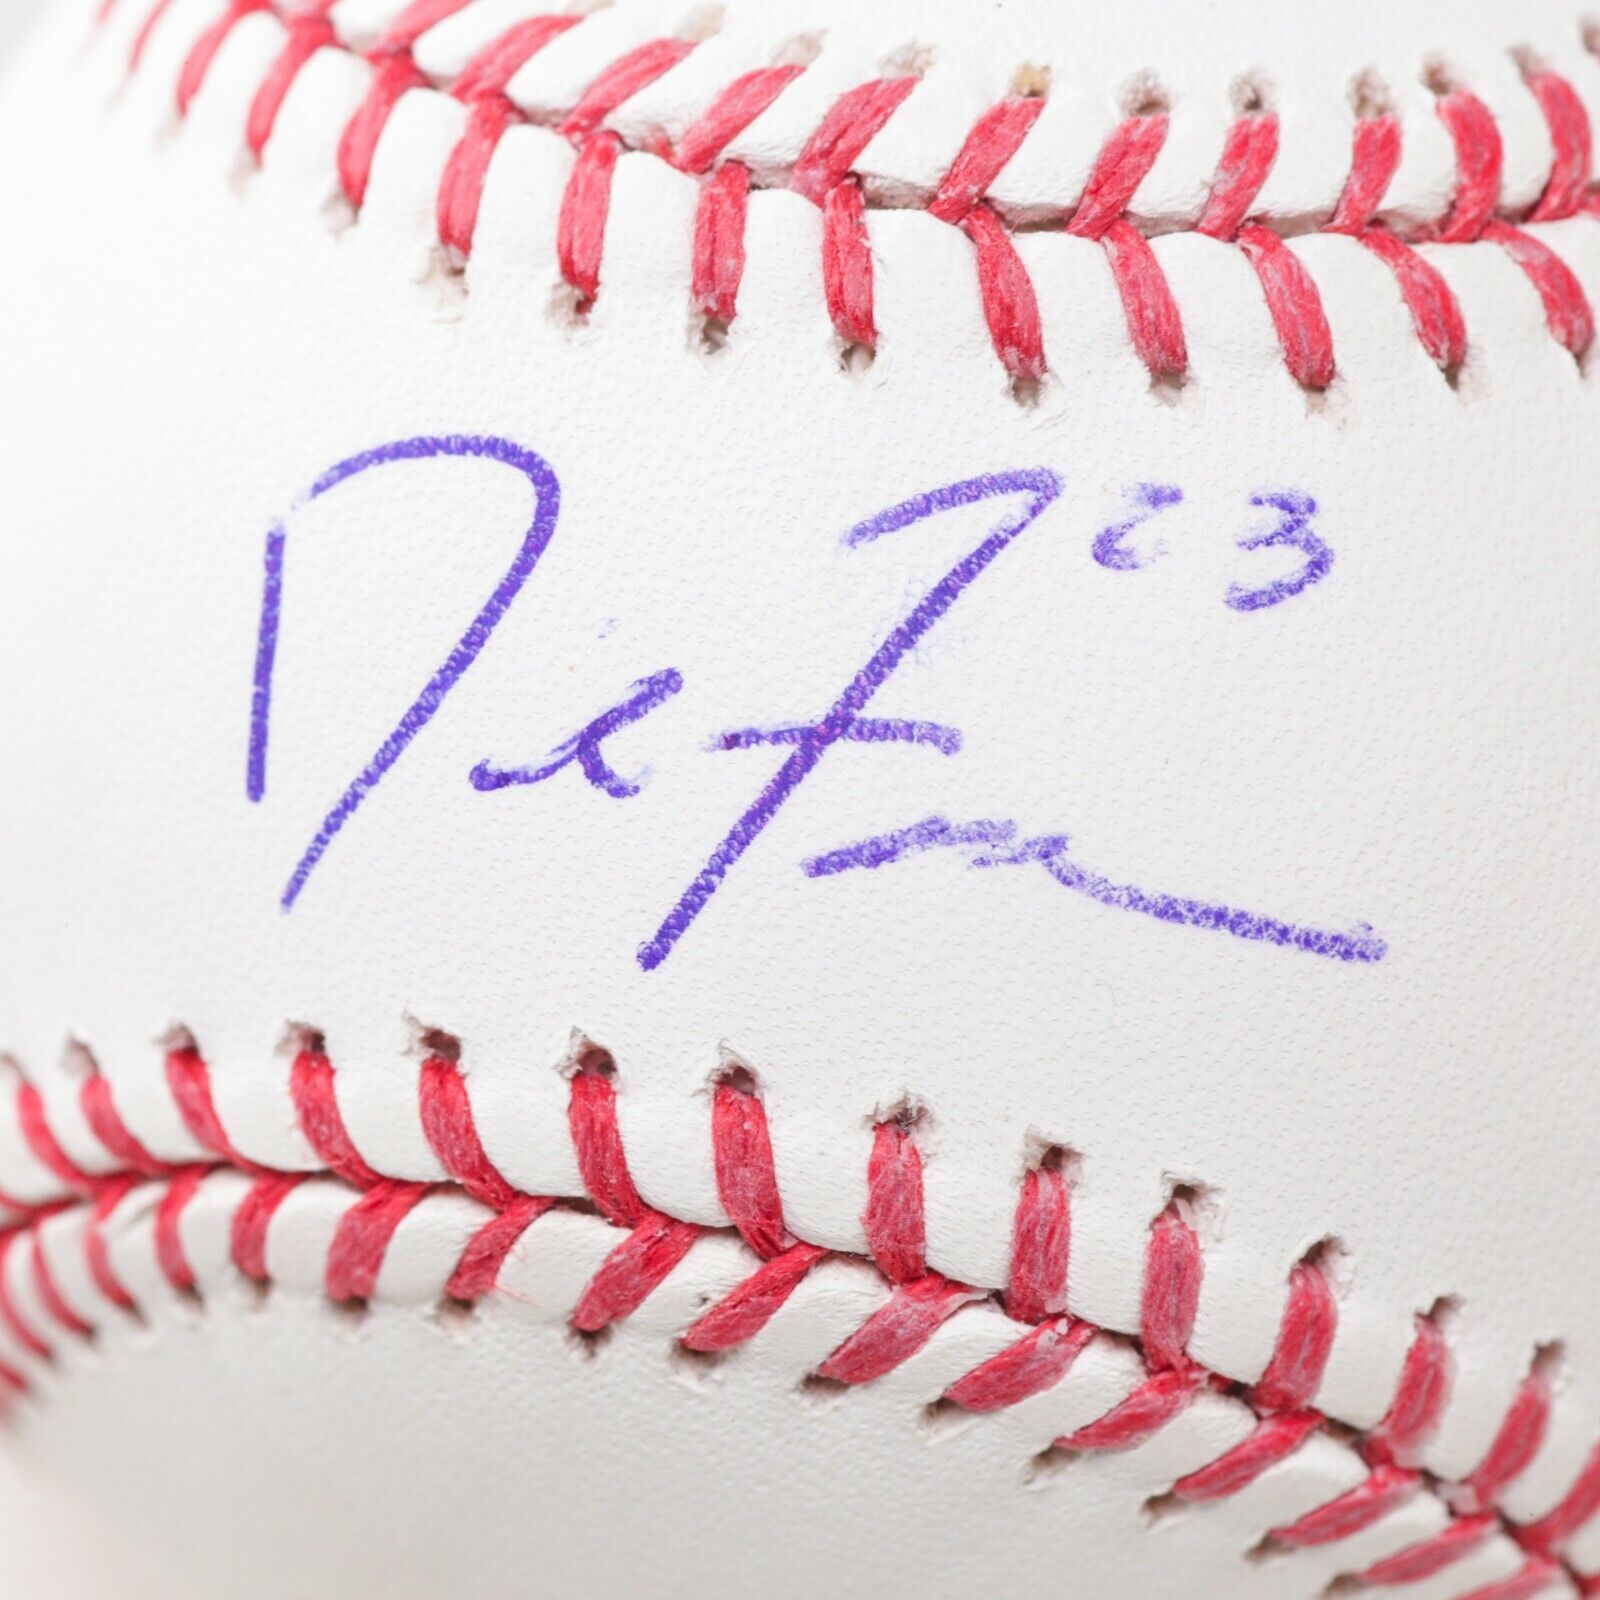 David Freese Autographed Baseball, With Original CAO